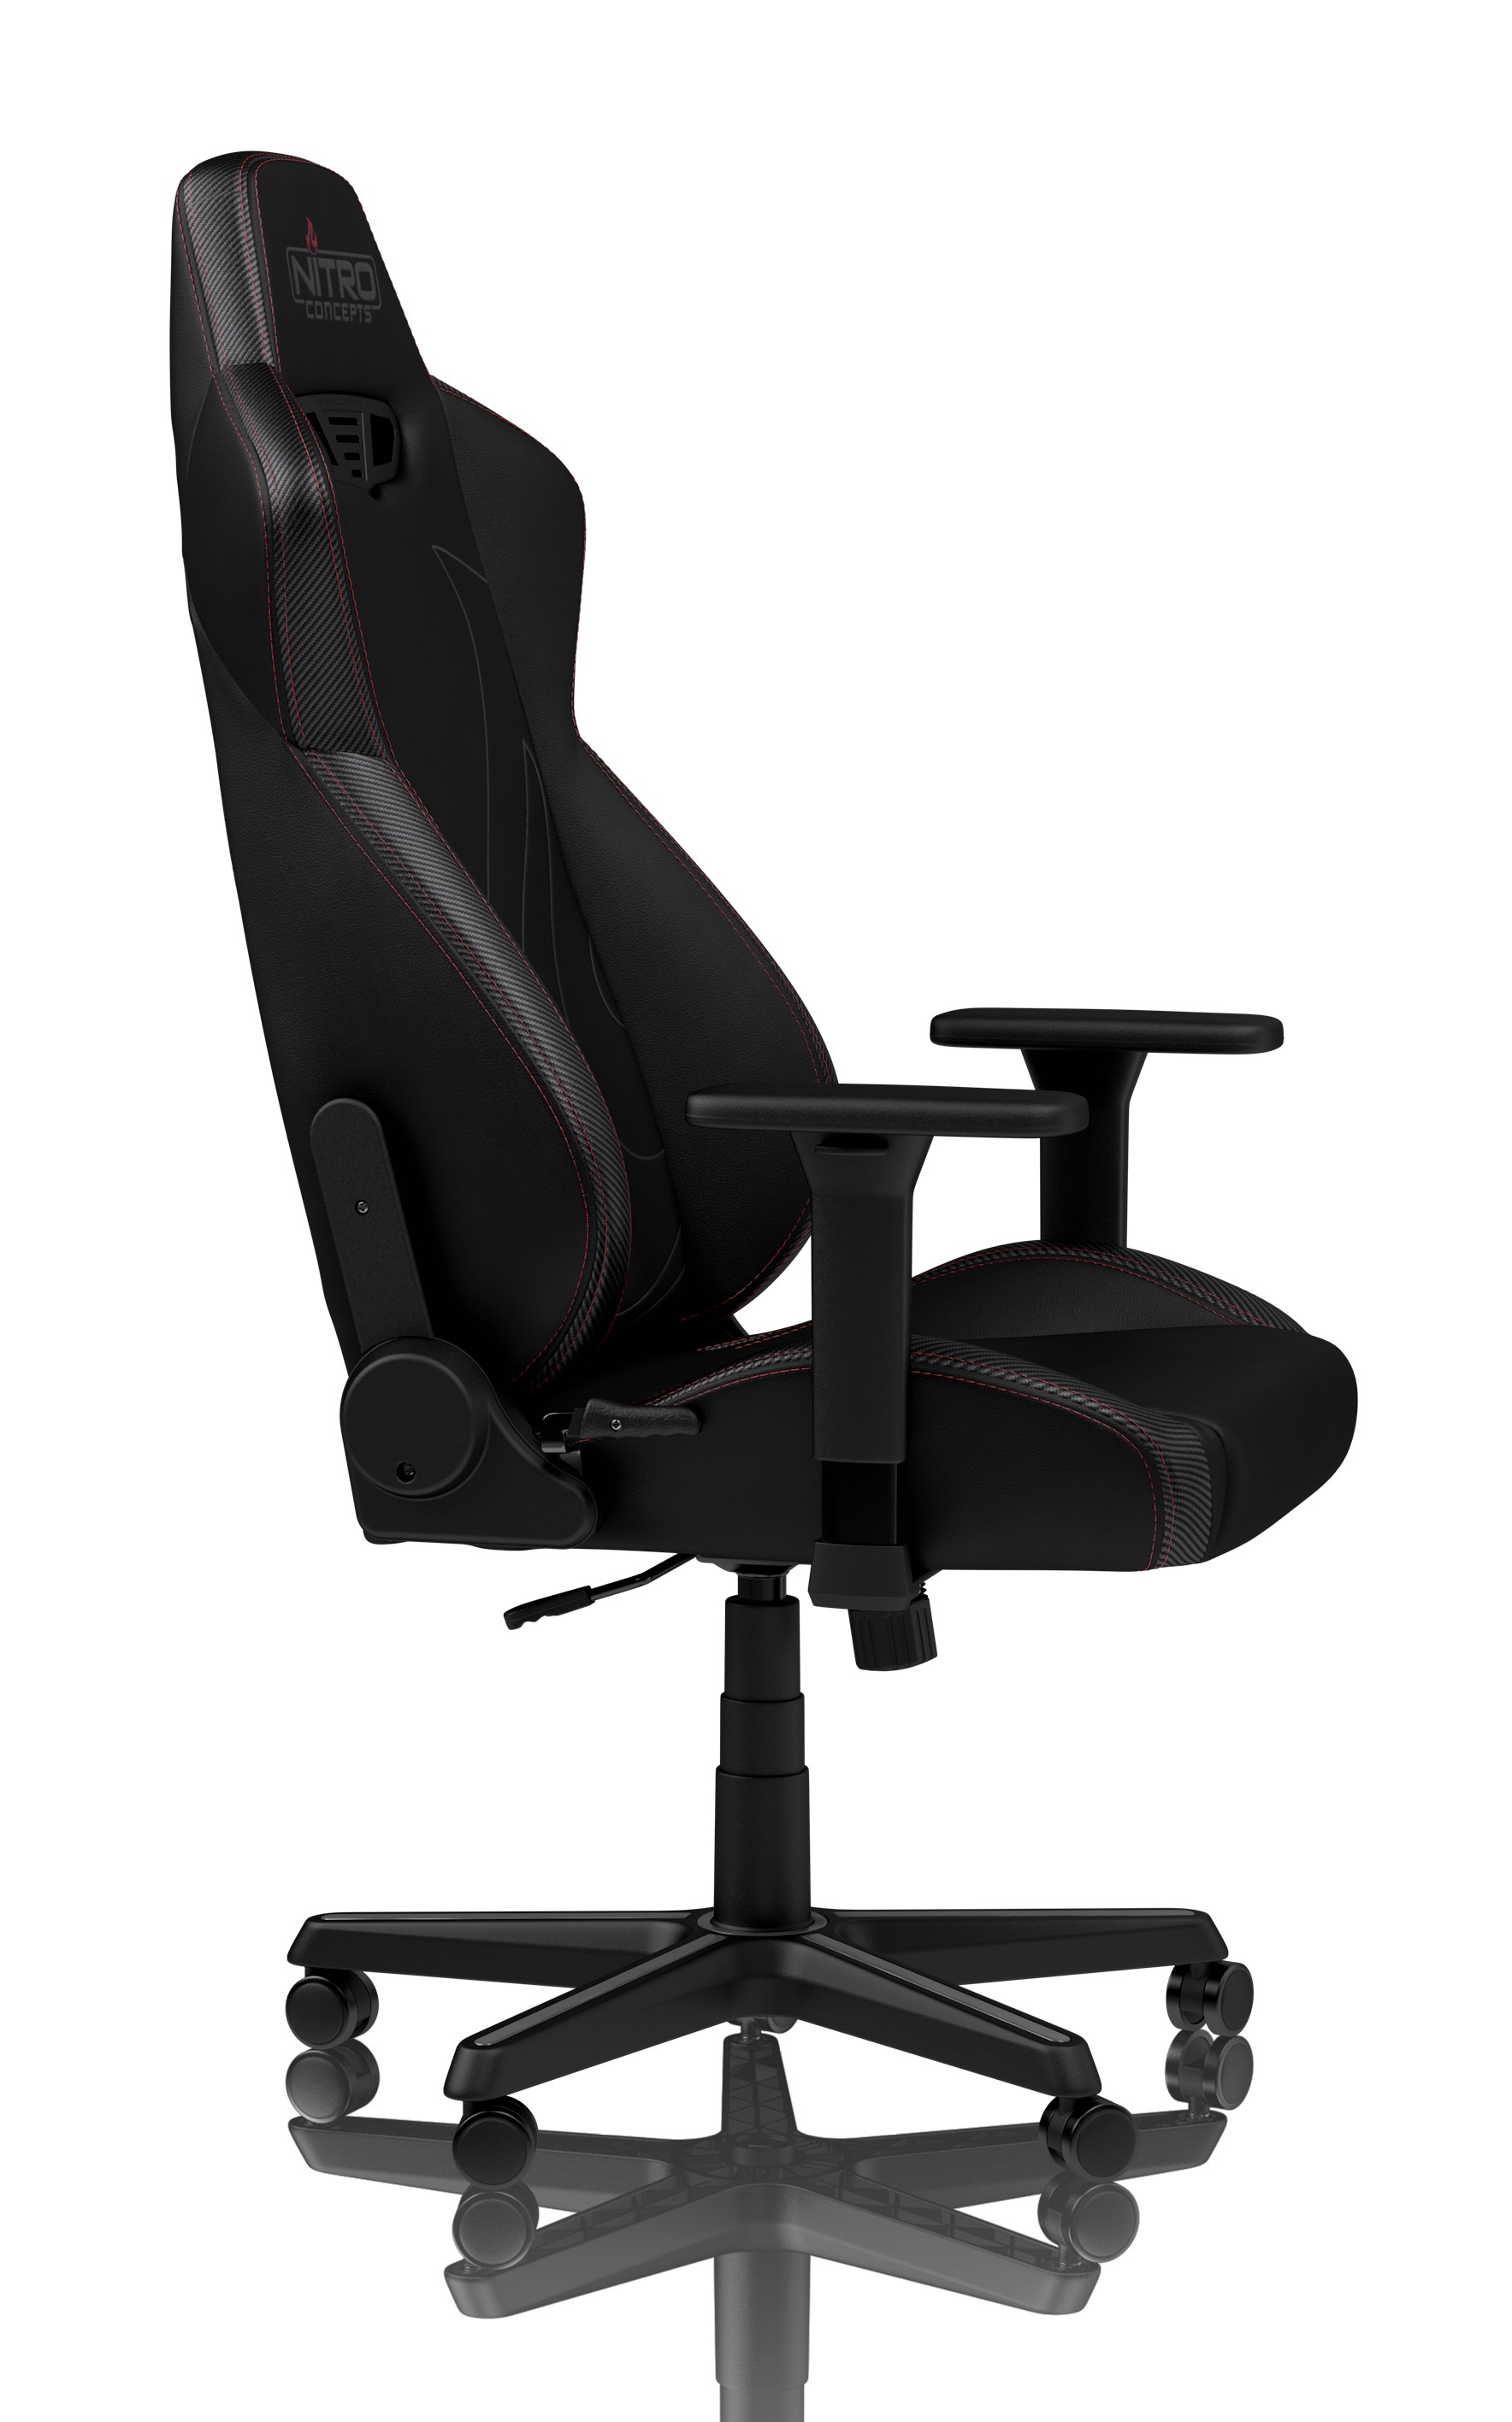 Nitro Concepts - Nitro Concepts S300 EX Gaming Chair - Carbon Black